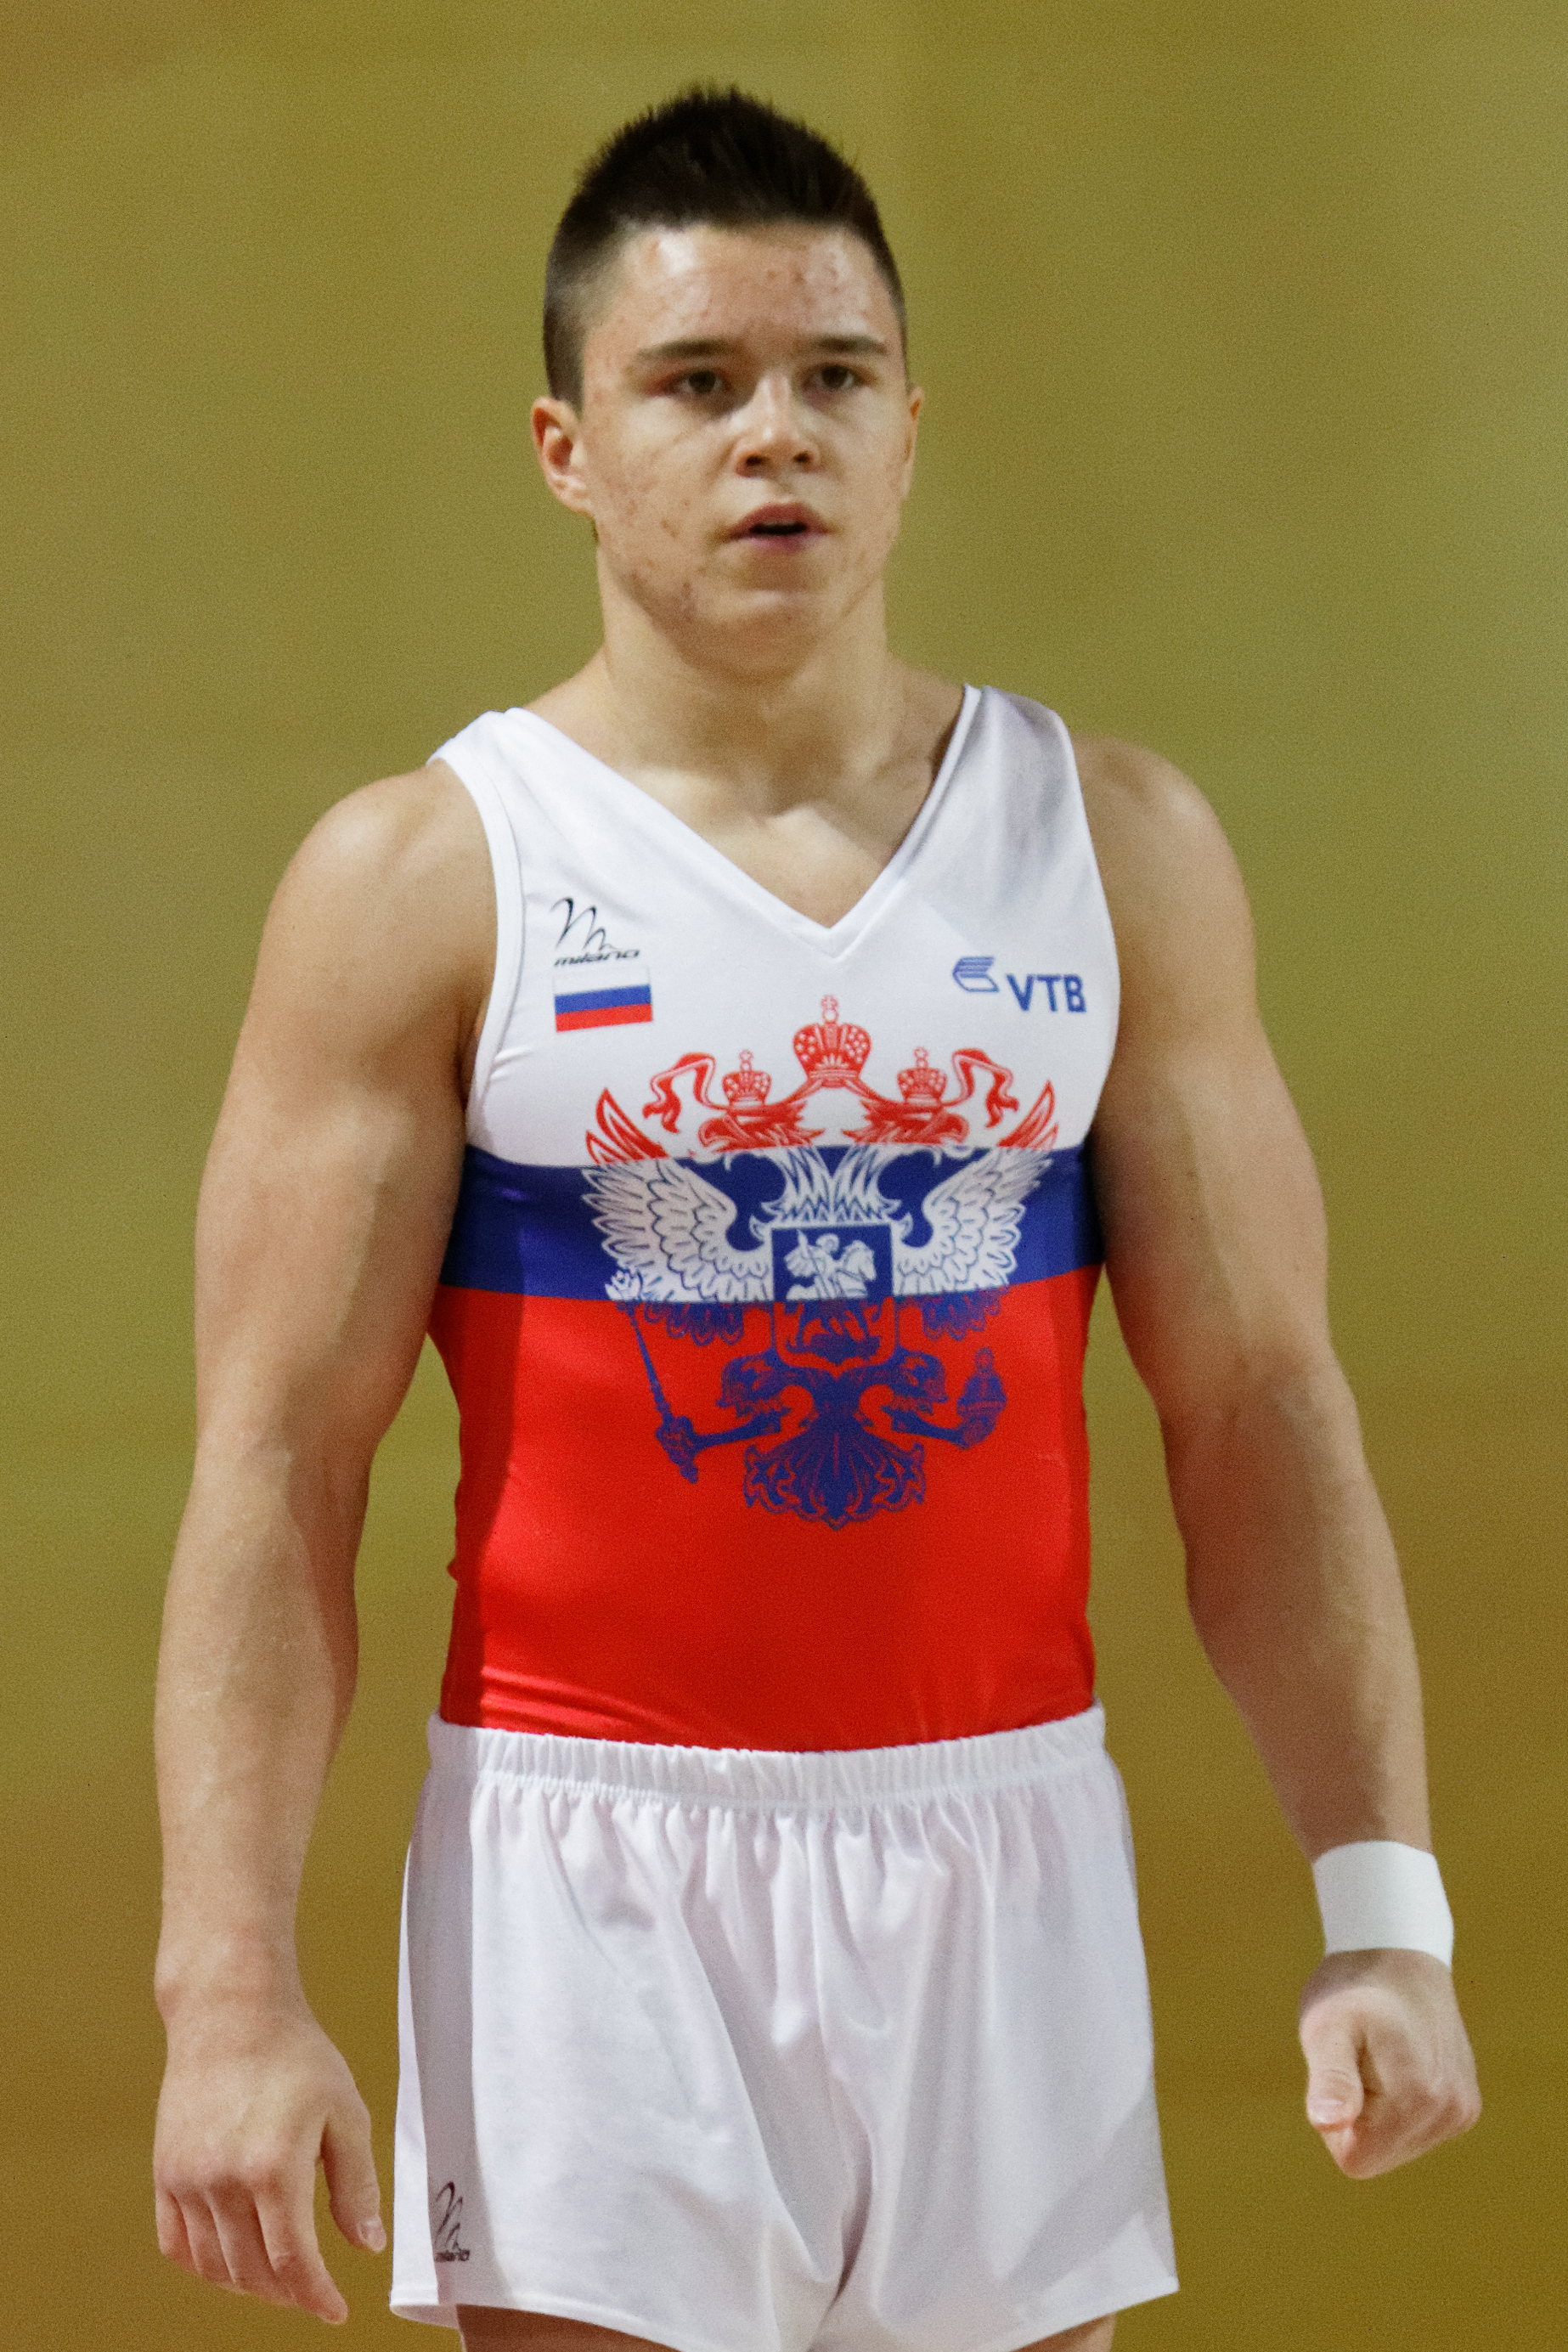 Gymnastics-Russia's Nagornyy captures all-around world title in Stuttgart